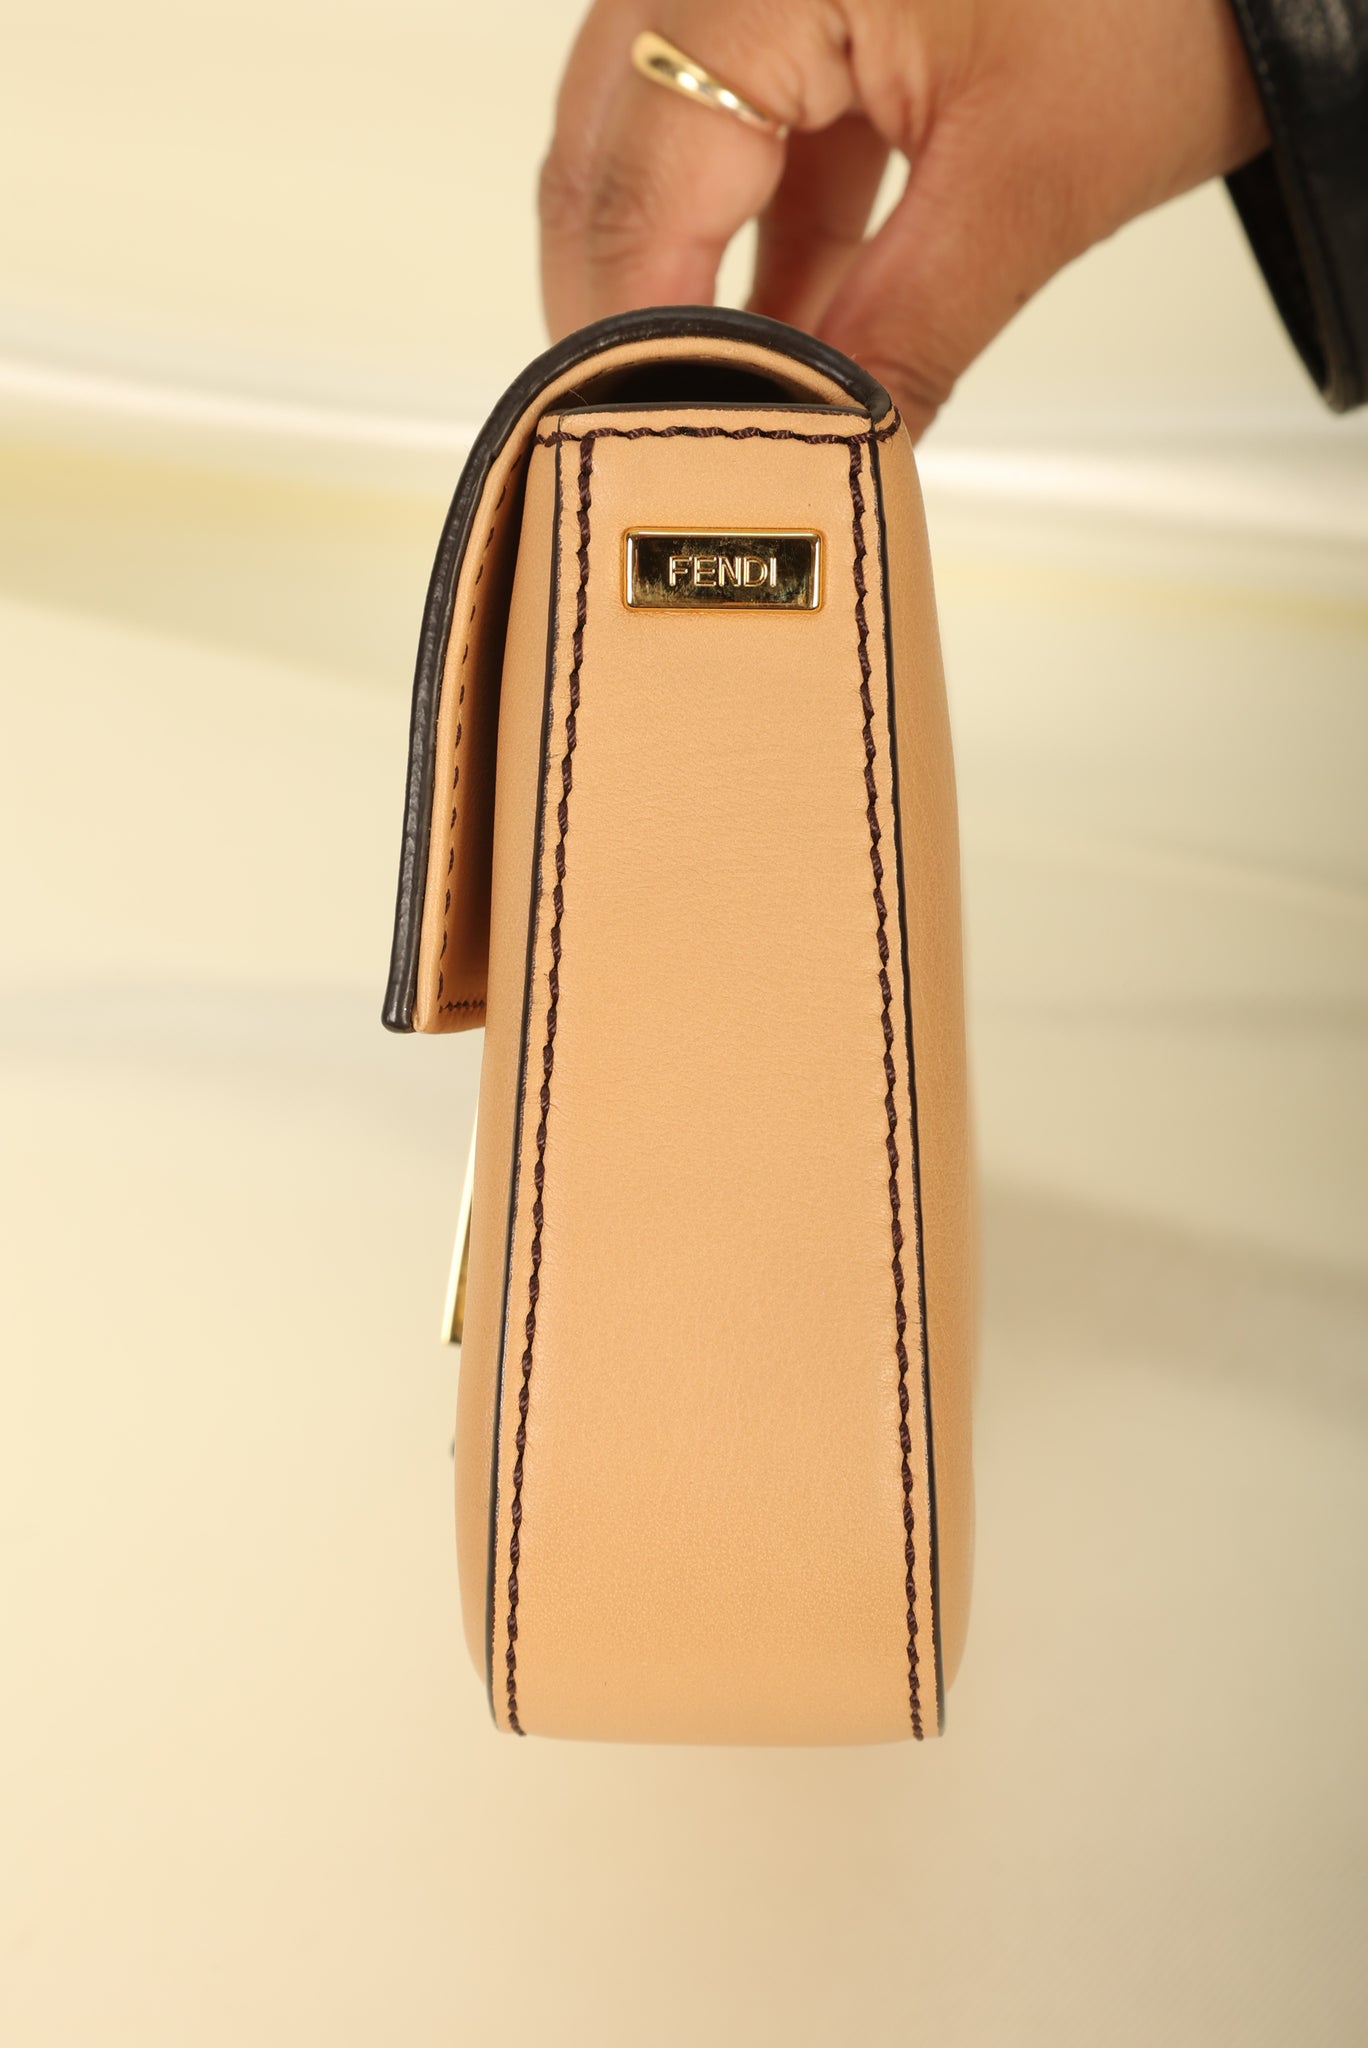 Fendi 2019 Leather Baguette